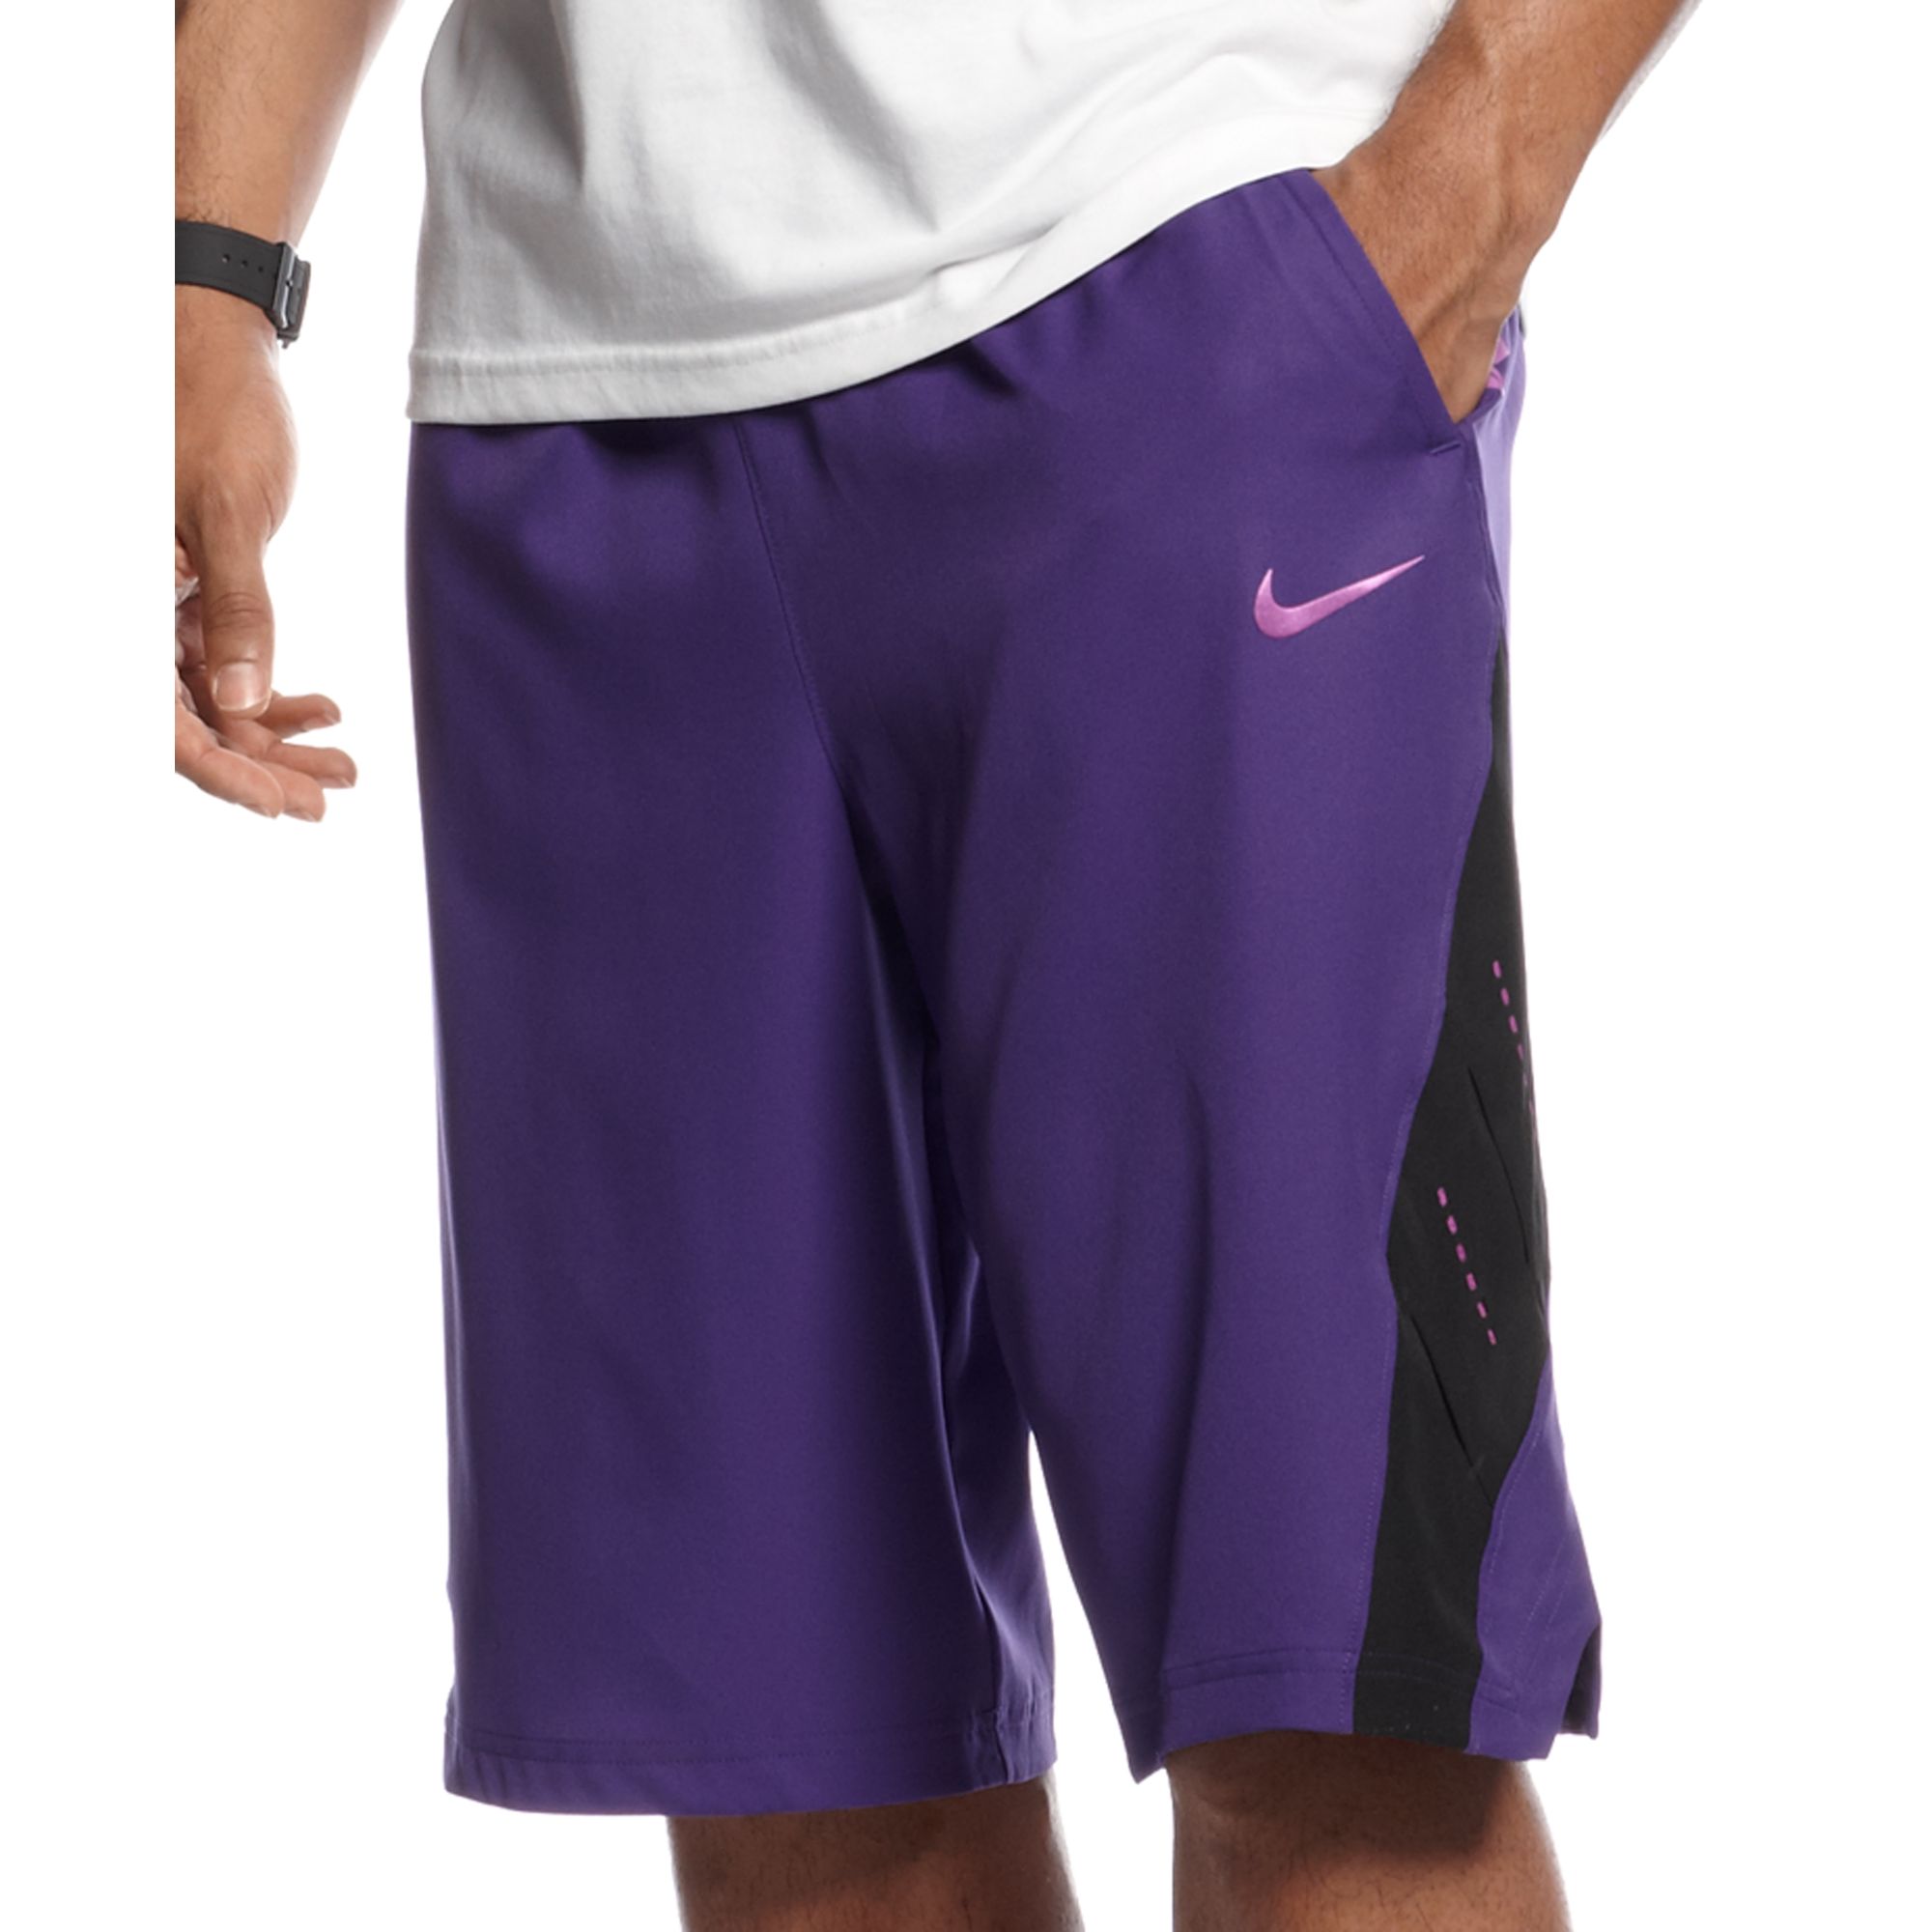 kobe purple shorts Online Shopping for 